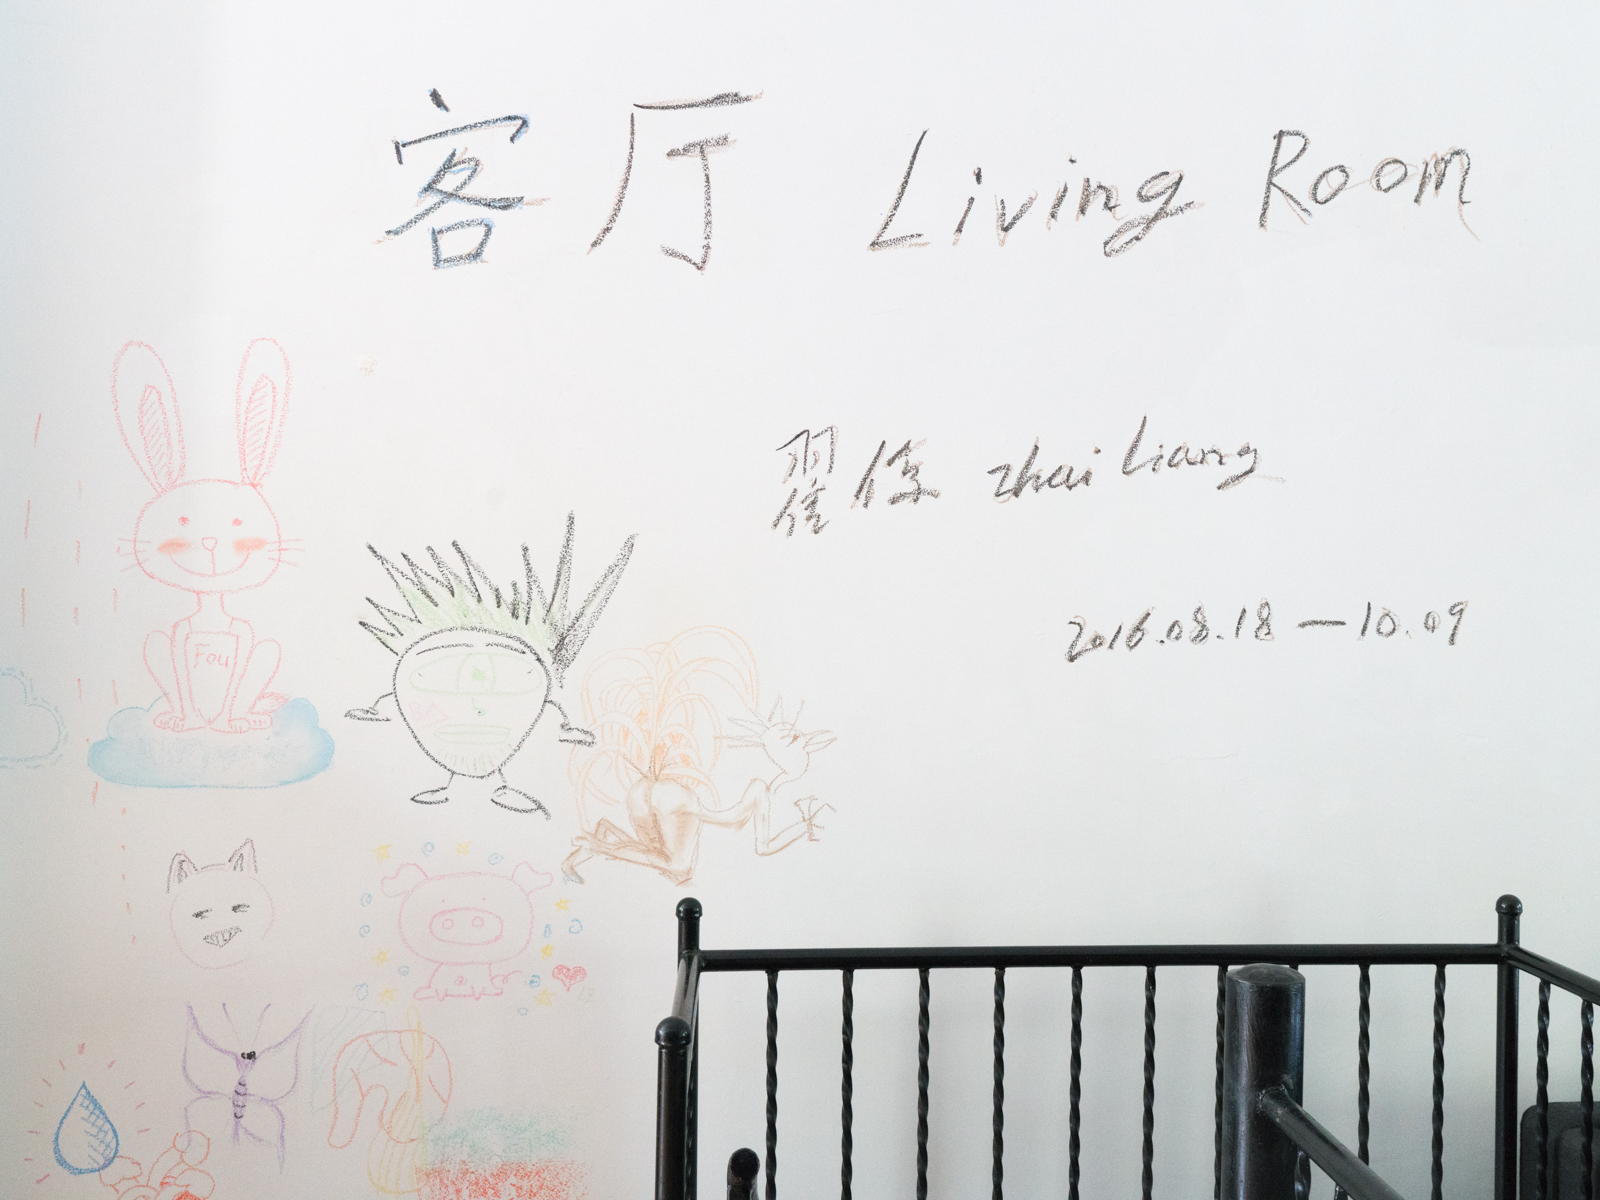  Zhai Liang: Living Room Installation view.  Photo by Zhe Zhu. 